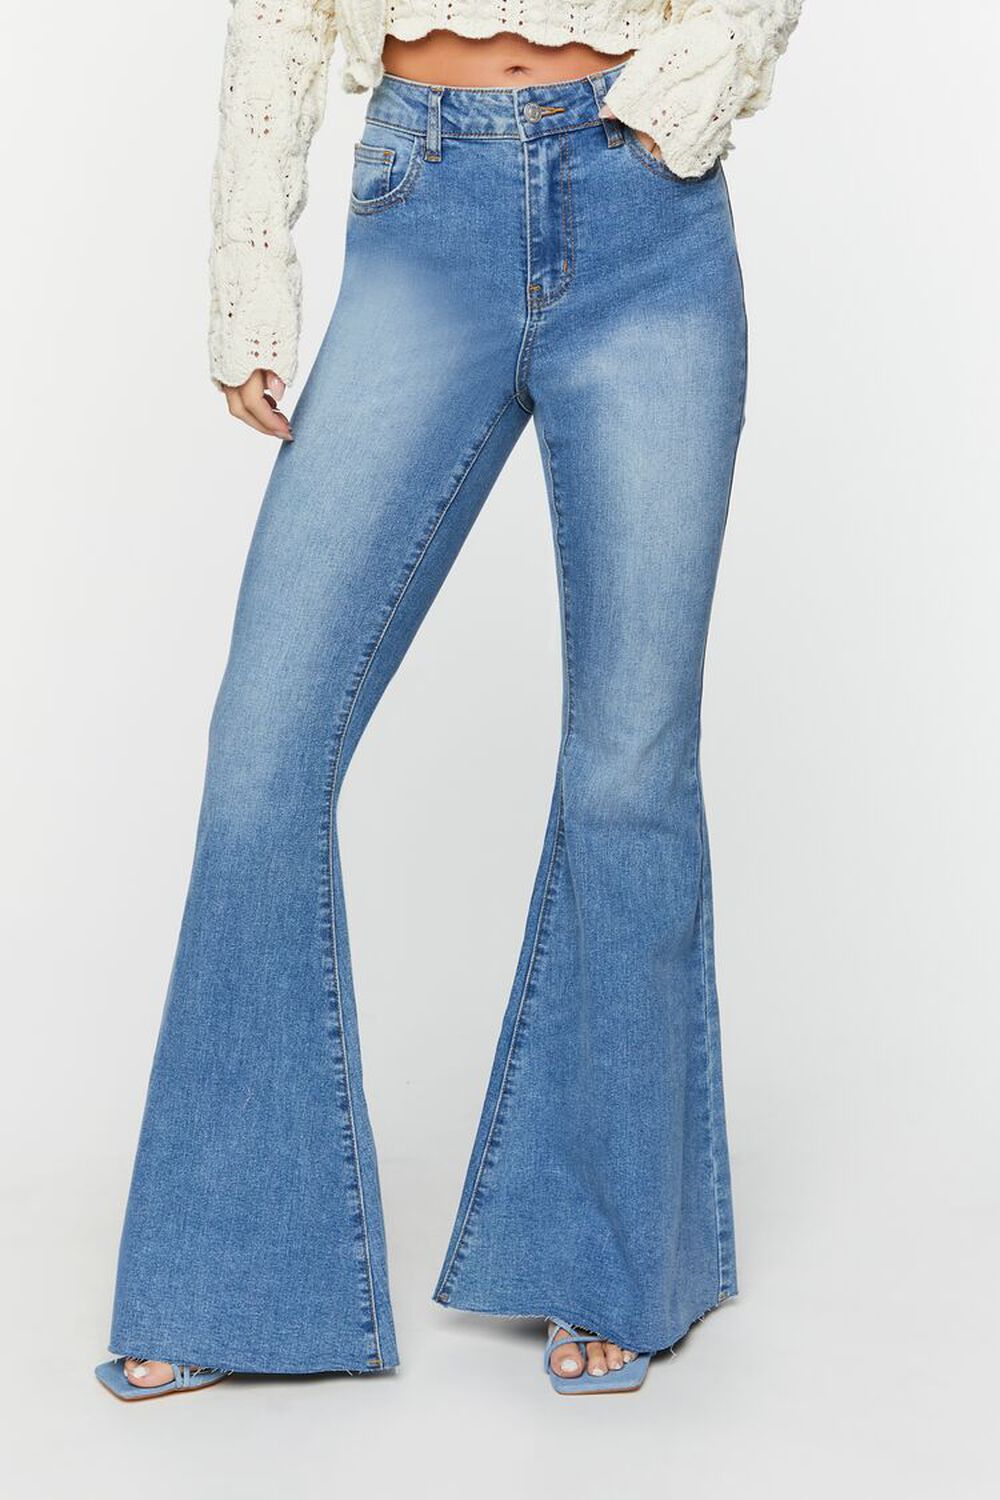 MEDIUM DENIM Raw-Cut Mid-Rise Flare Jeans, image 1